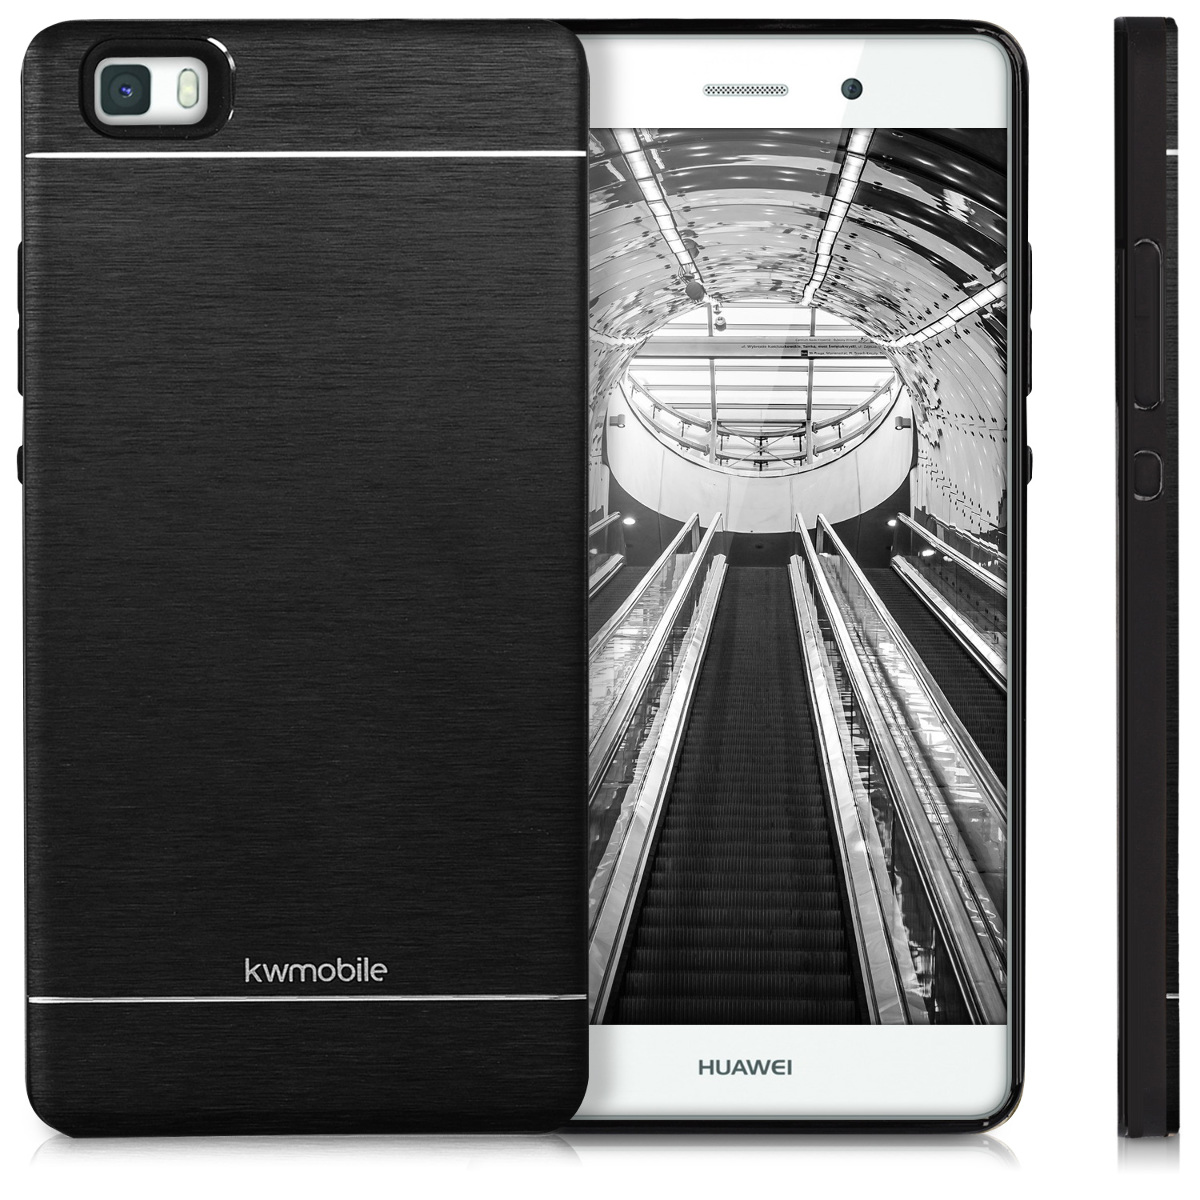 2017 kwmobile Huawei P8 Lite 2017 Custodia in Silicone TPU Trasparente Bianco/Nero Back Case per Huawei P8 Lite Cover